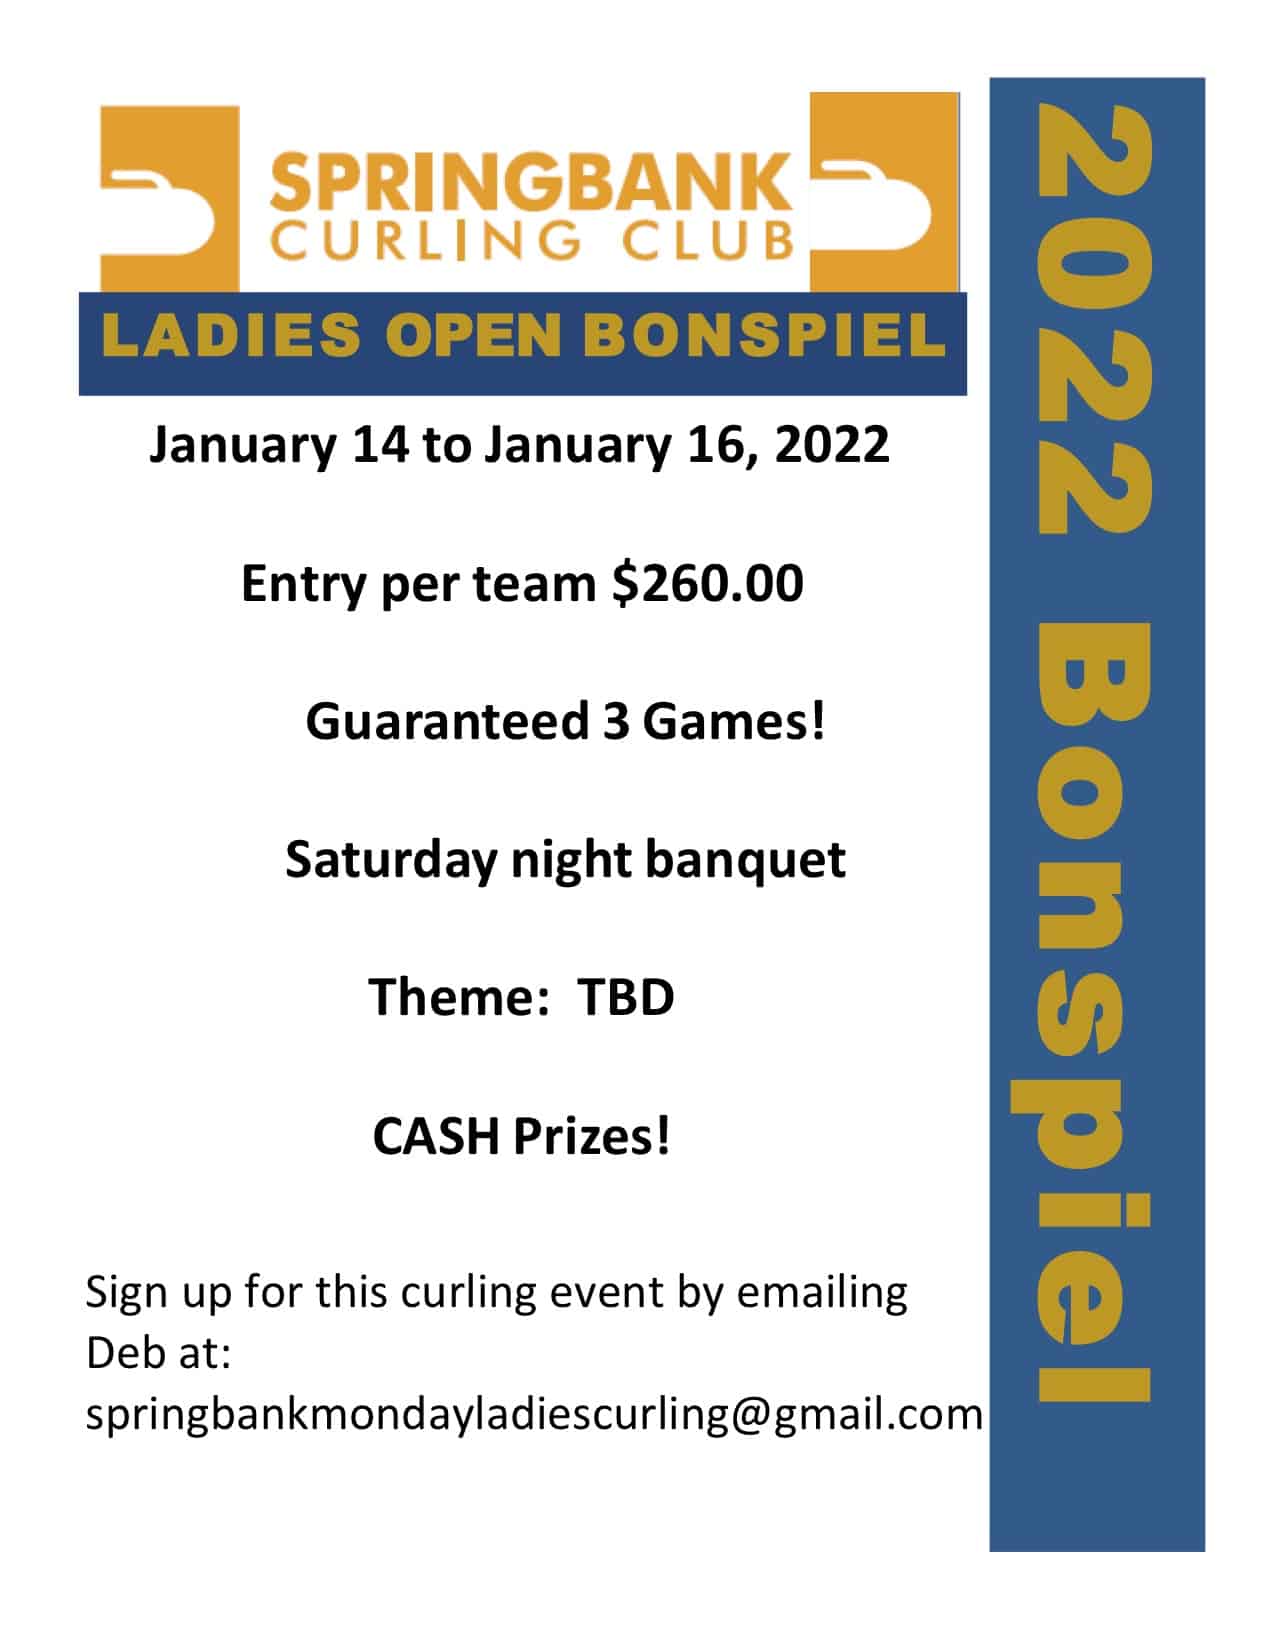 2022 Springbank Curling Club Ladies Open Bonspiel Poster